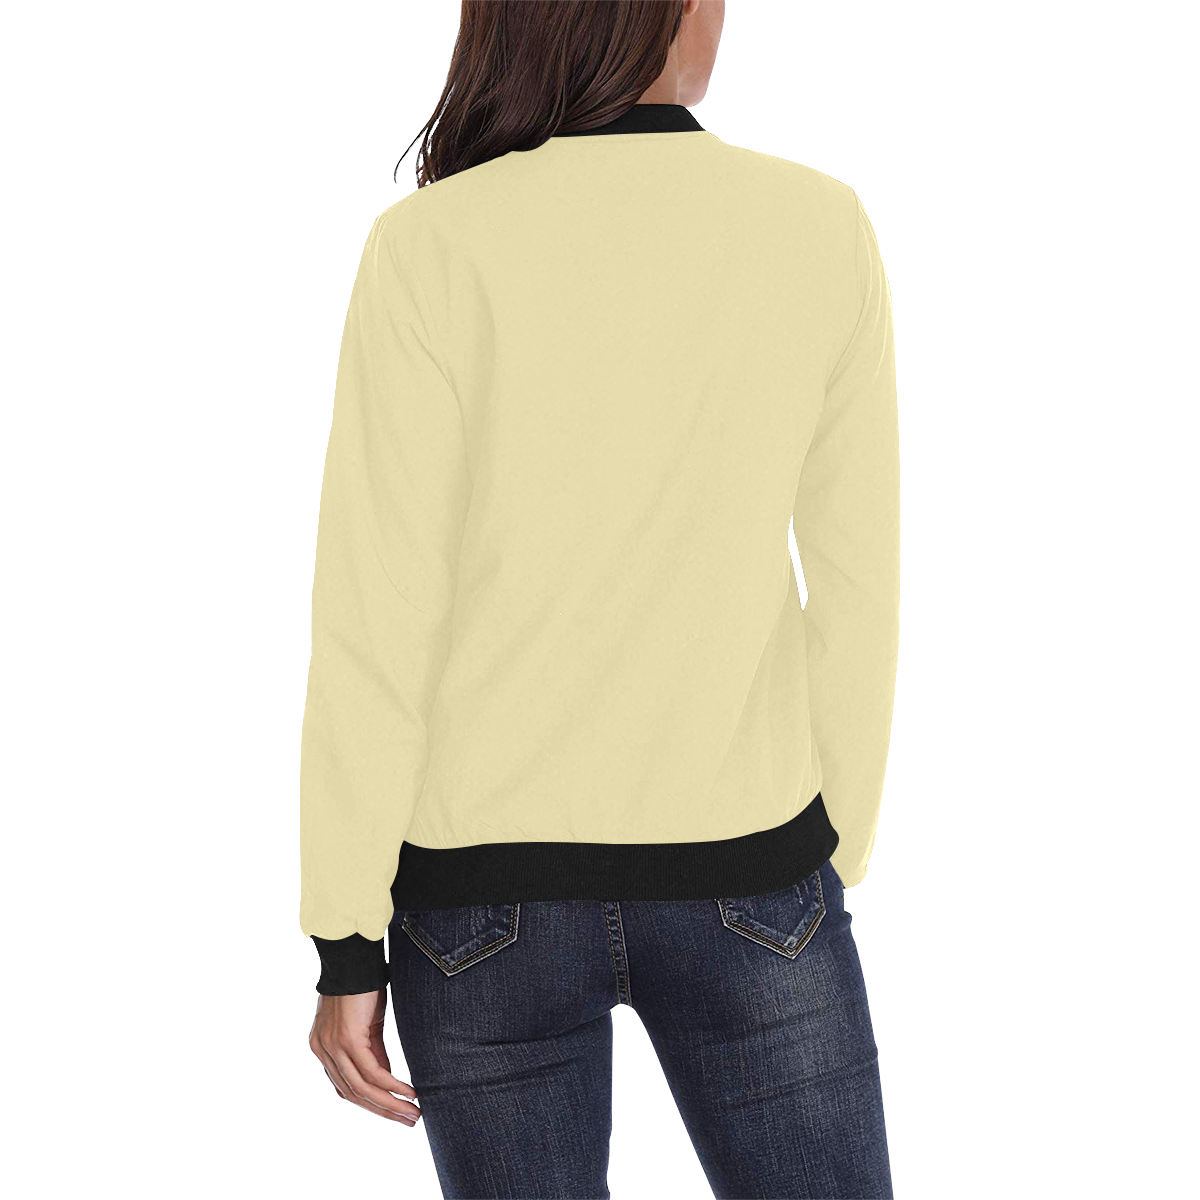 color vanilla All Over Print Bomber Jacket for Women (Model H36)